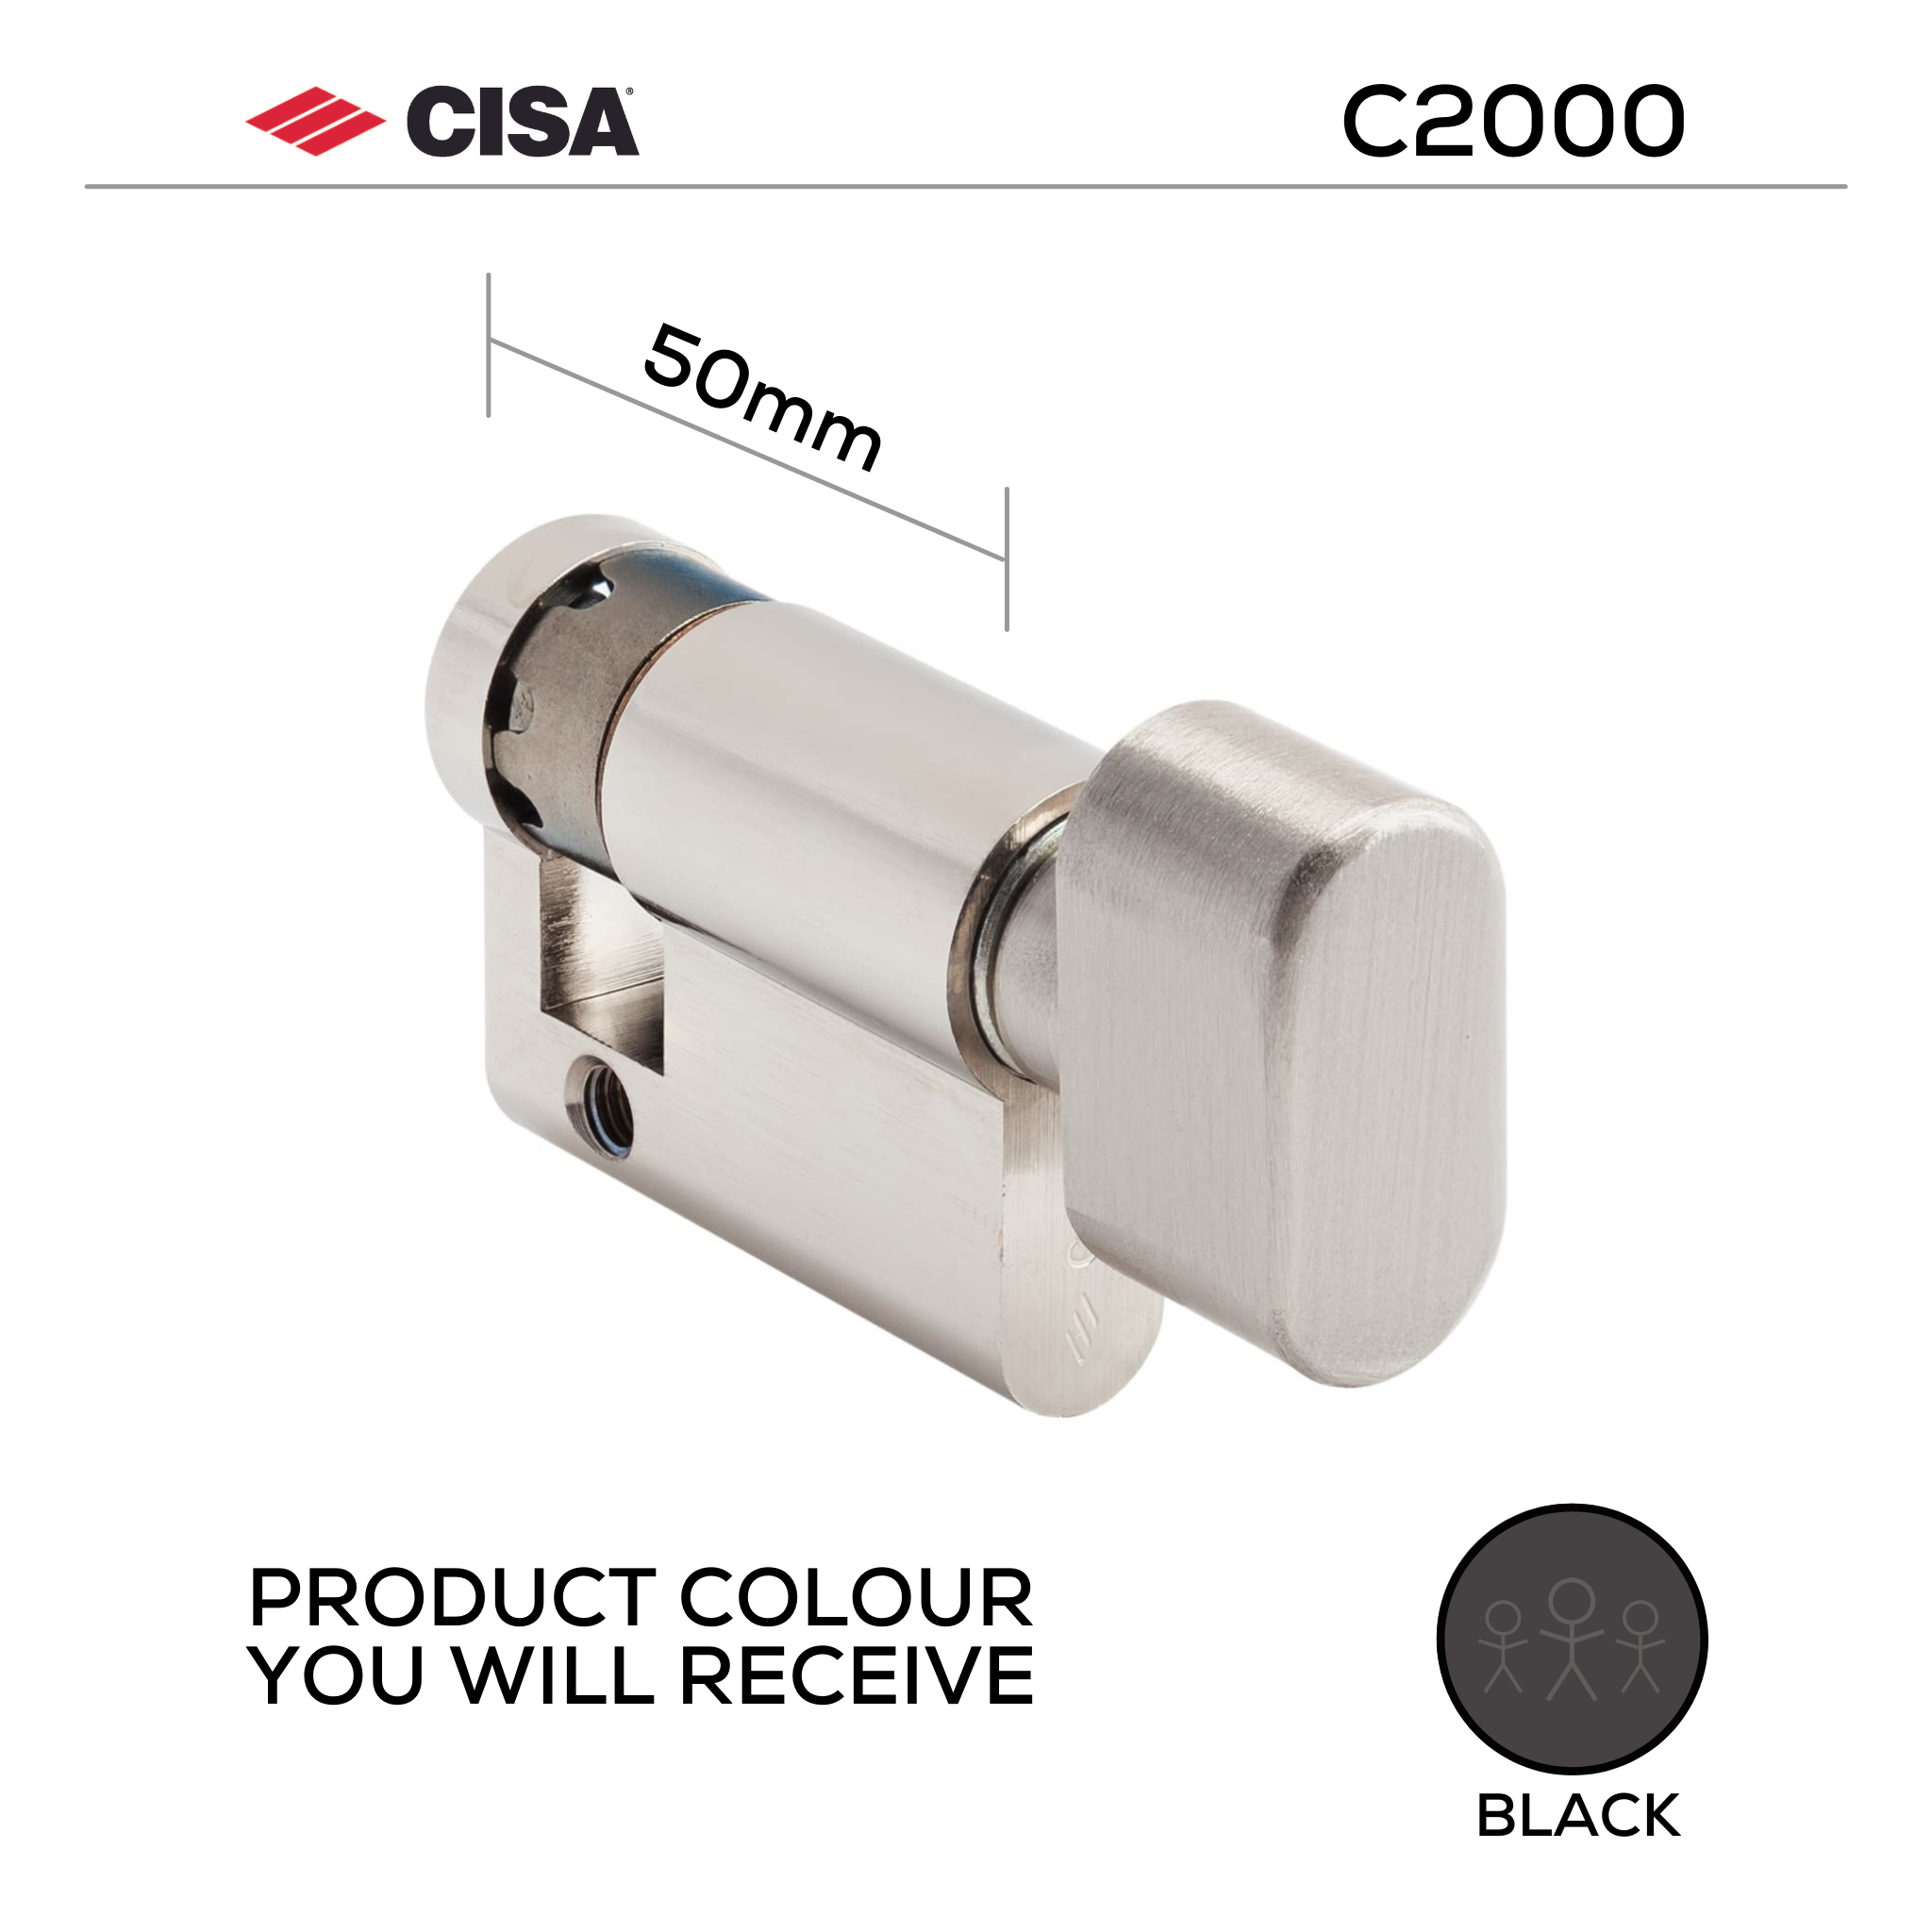 08559-18-12-BLK-KD, 50mm - 40/10, Half (Single Cylinder), C2000, Thumbturn, Keyed to Differ (Standard), Black, CISA